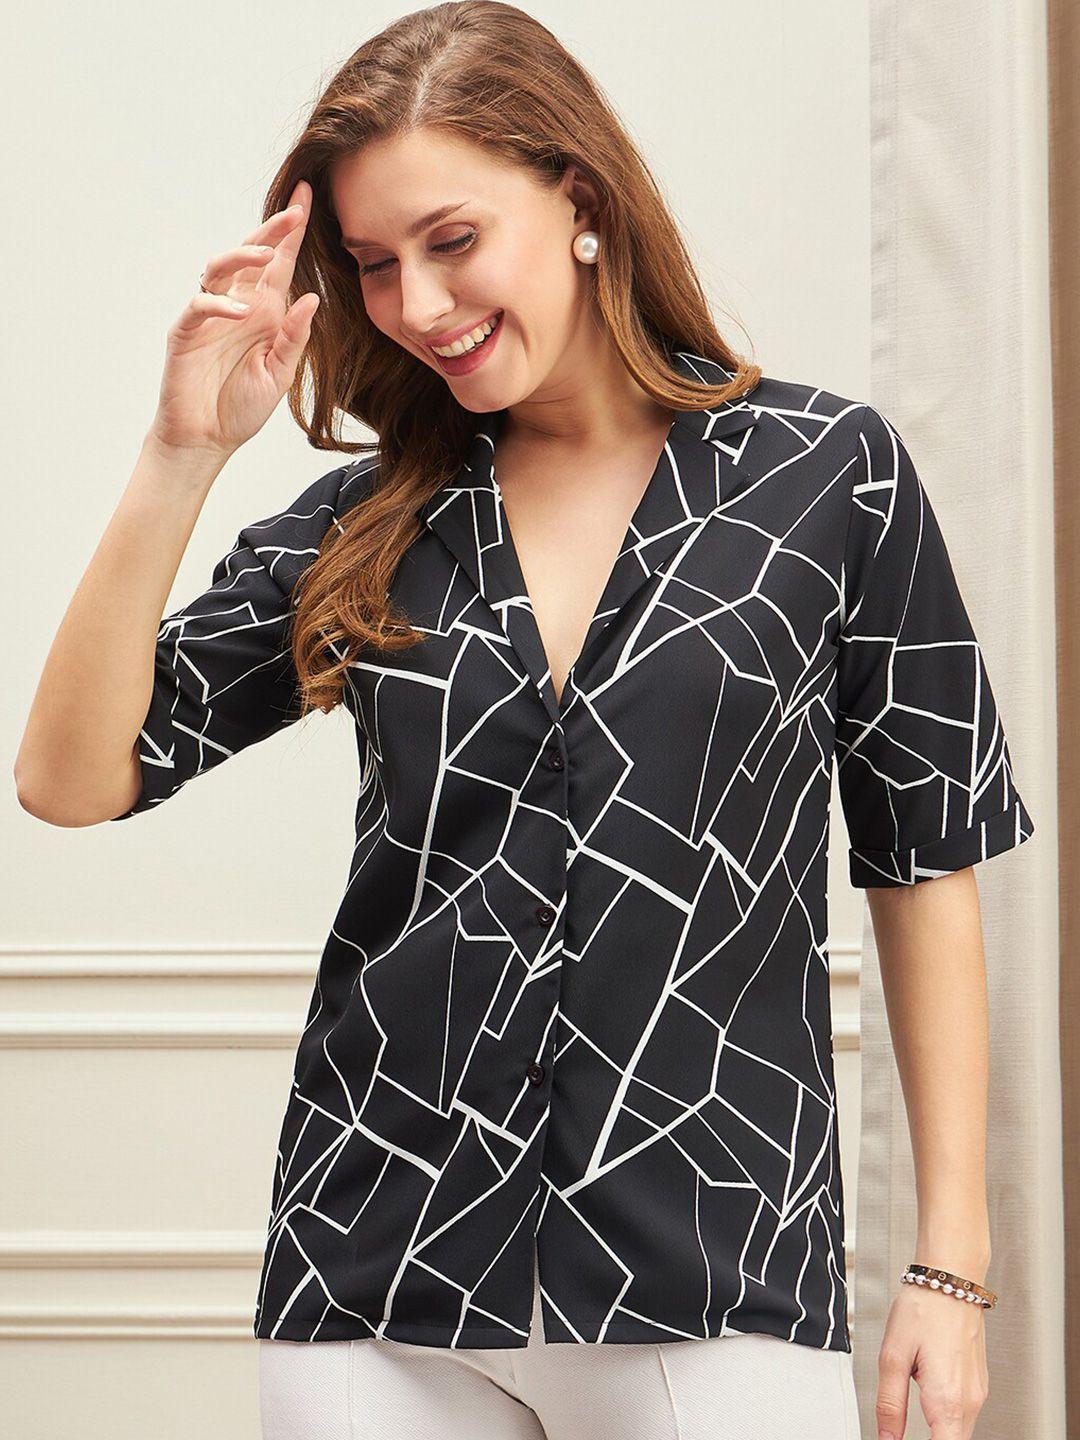 berrylush bizwear geometric printed shirt style top